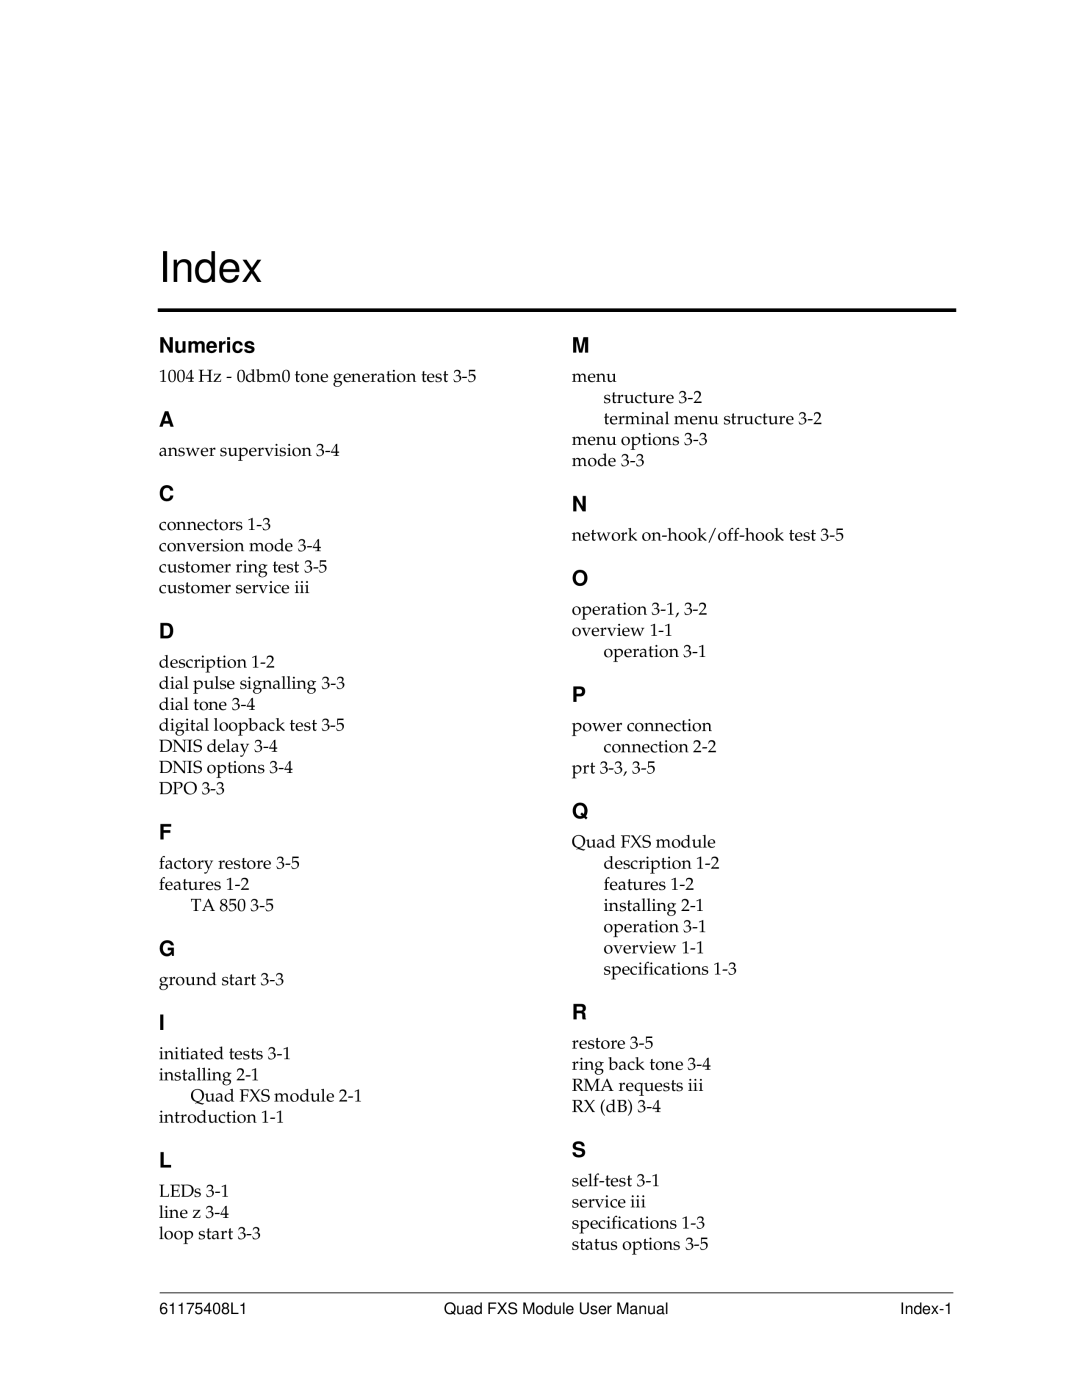 ADTRAN 1175408L1 user manual Index, Numerics 